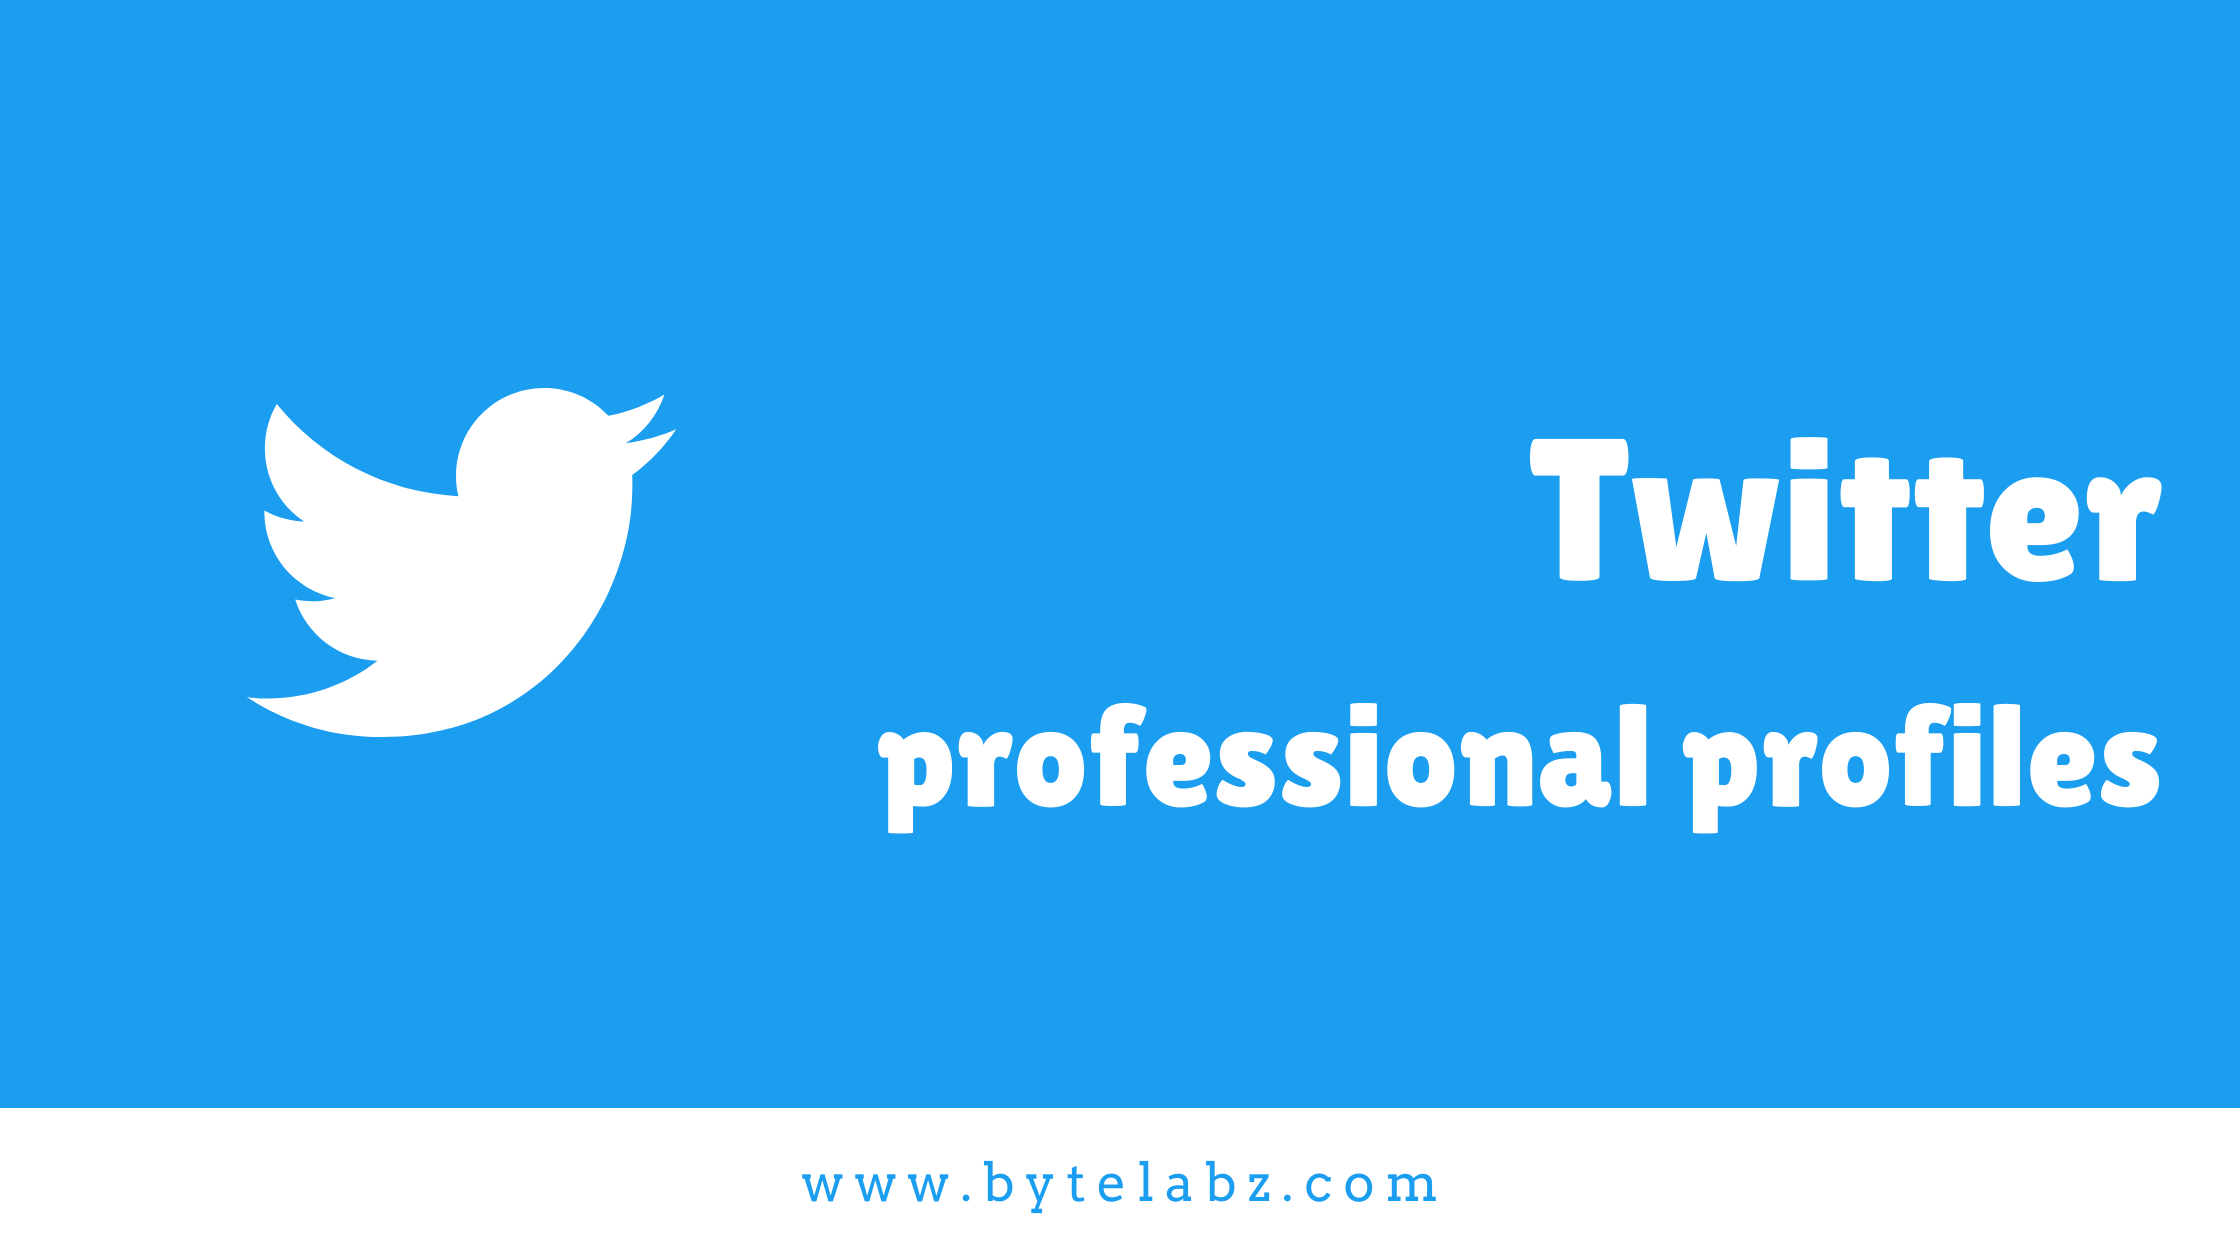 Twitter professional profiles